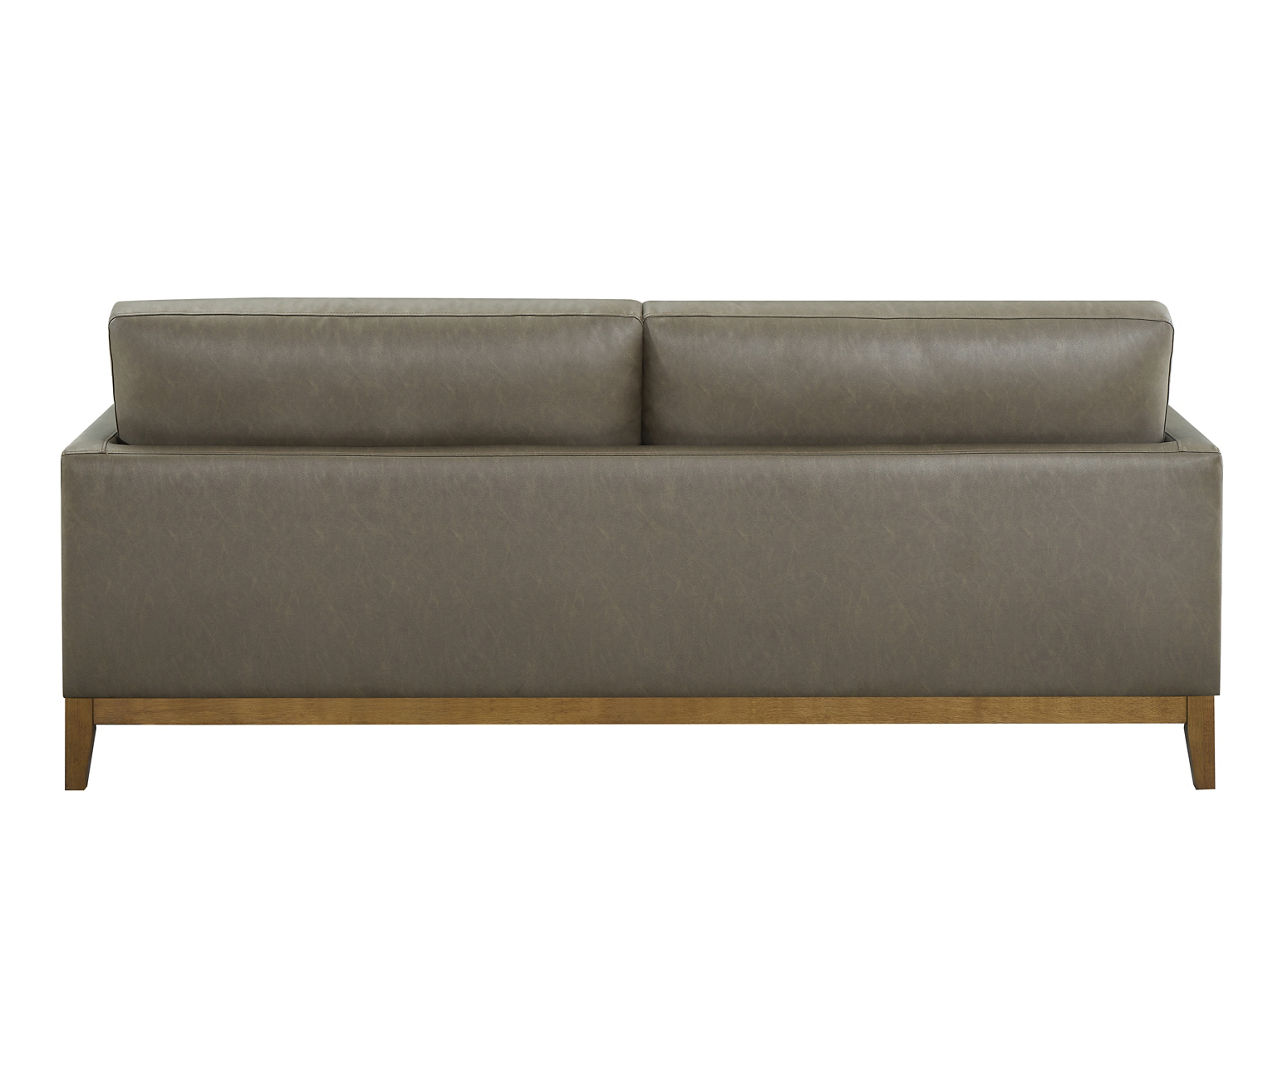 Drexel Rowan Brown Faux Leather Sofa | Big Lots